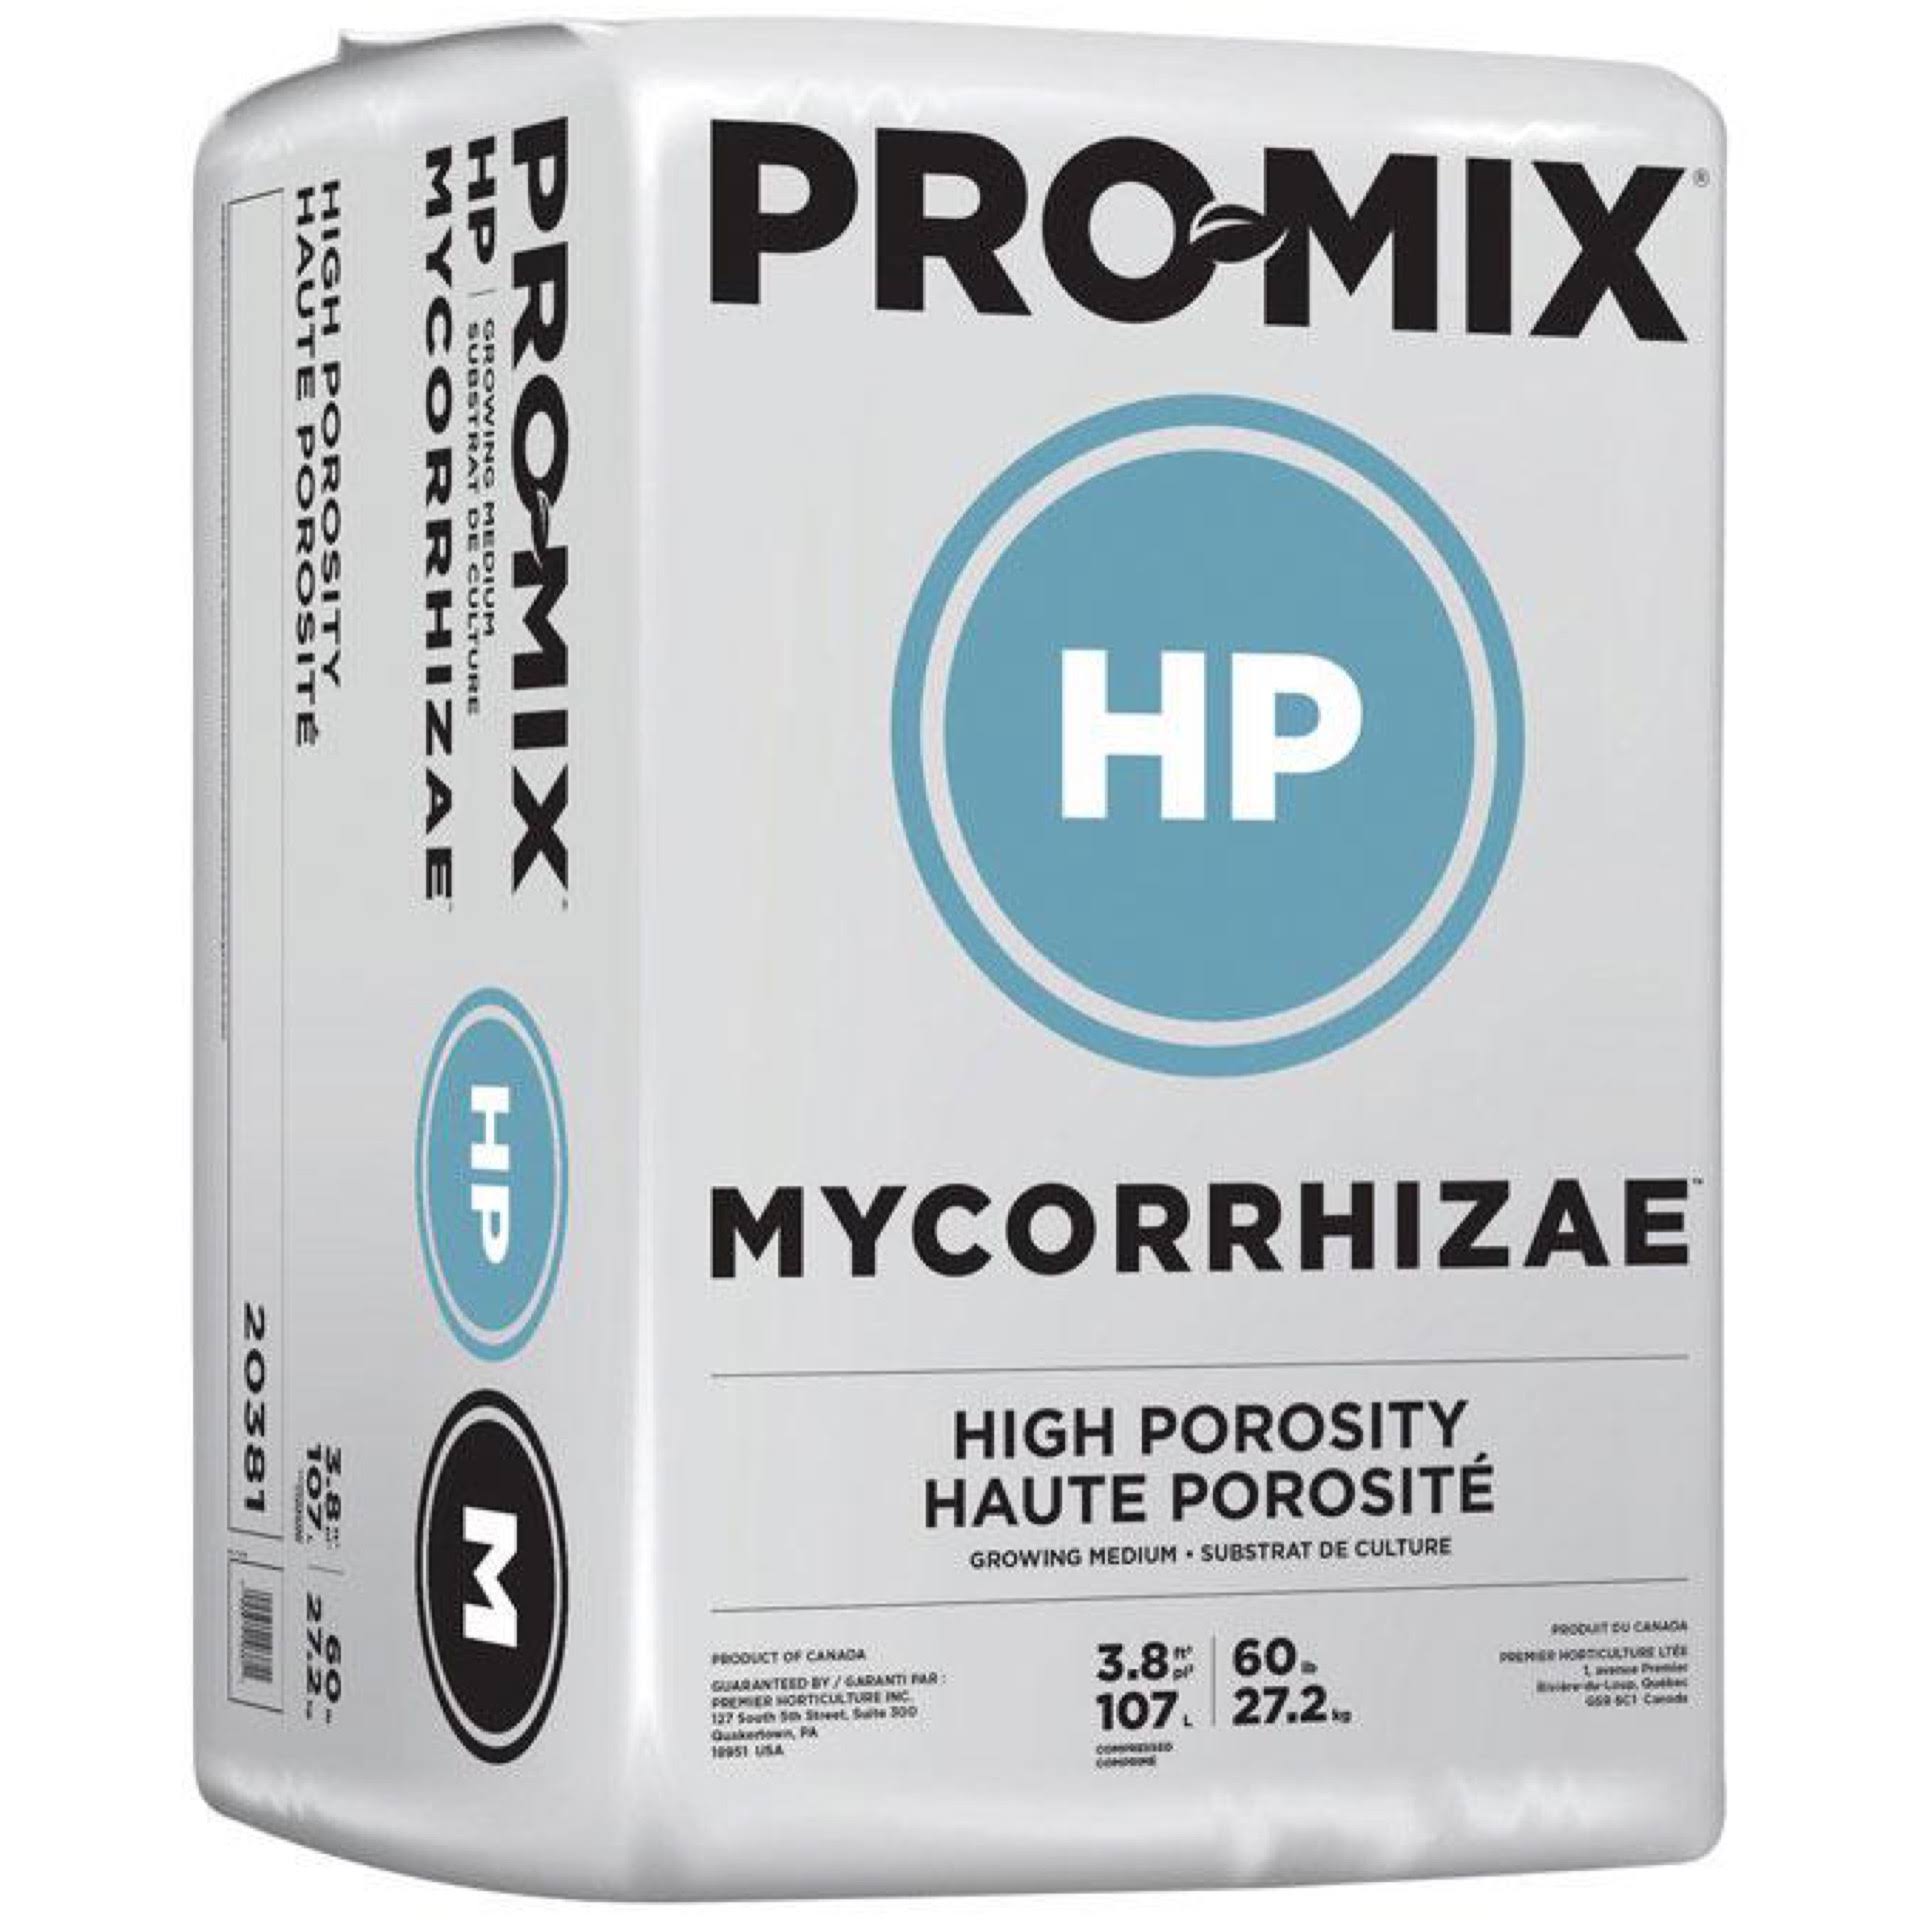 Premier Horticulture Pro Mix HP High Porosity with Mycorise - 27.2kg